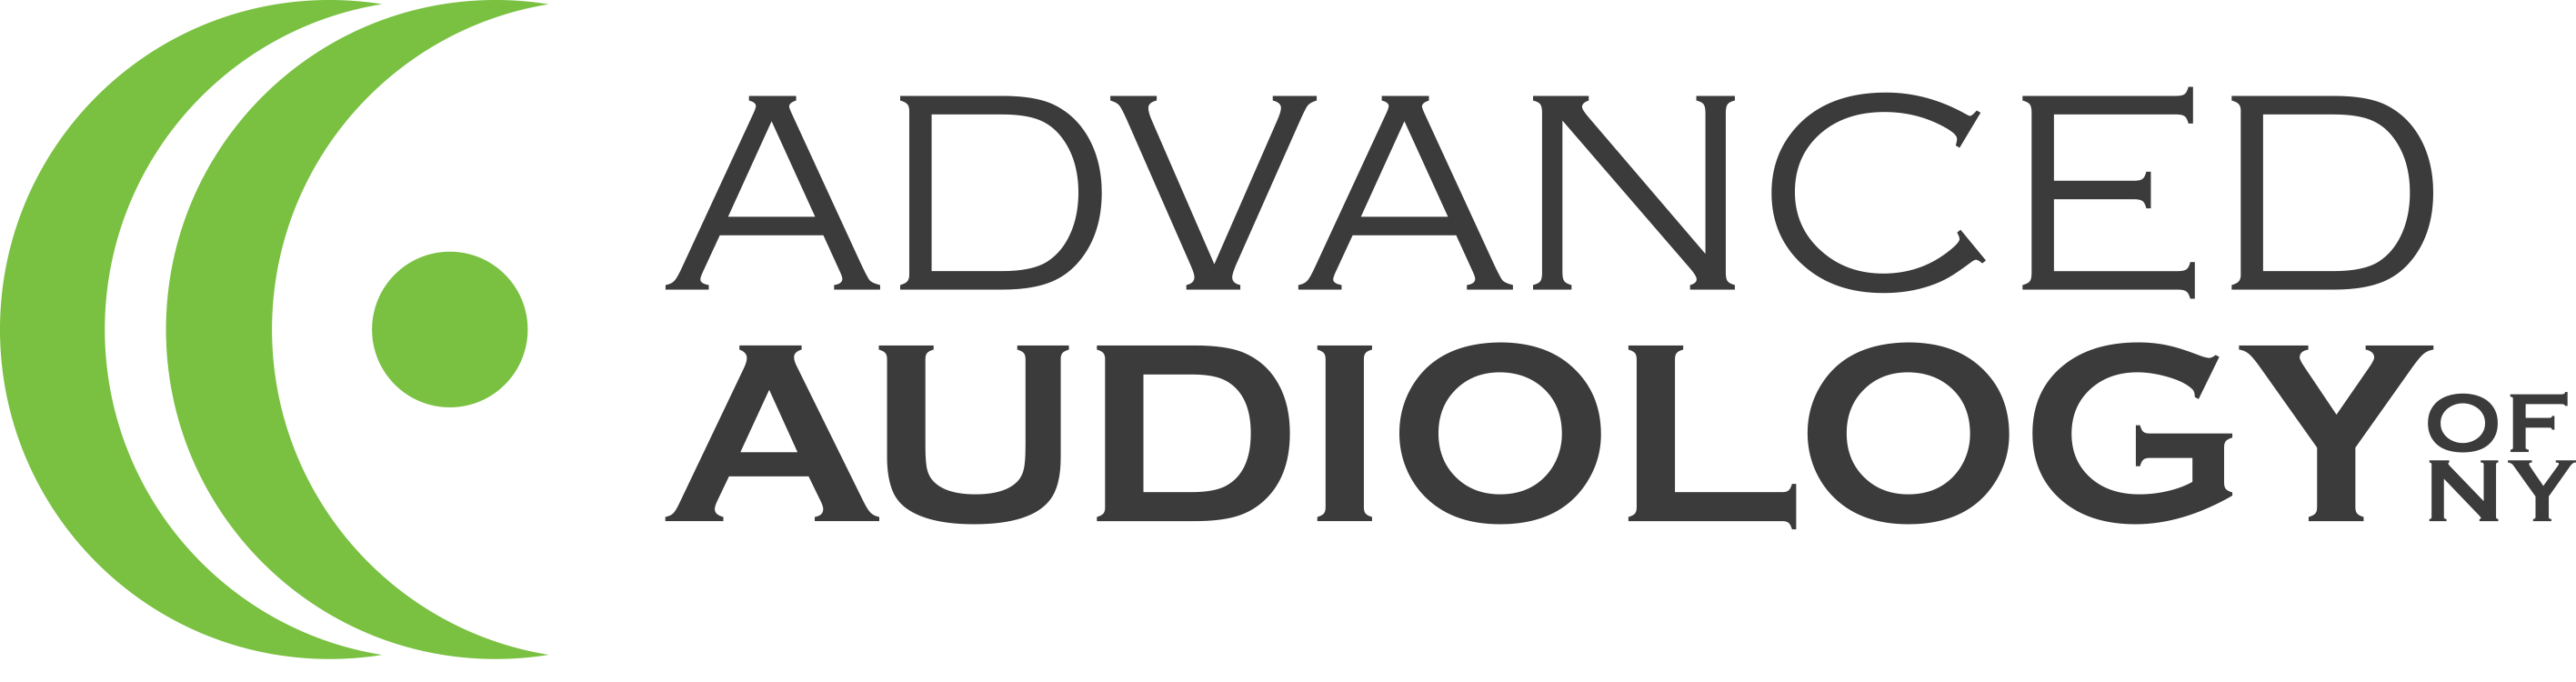 advanced audiology PMScolor logo 1 1 1